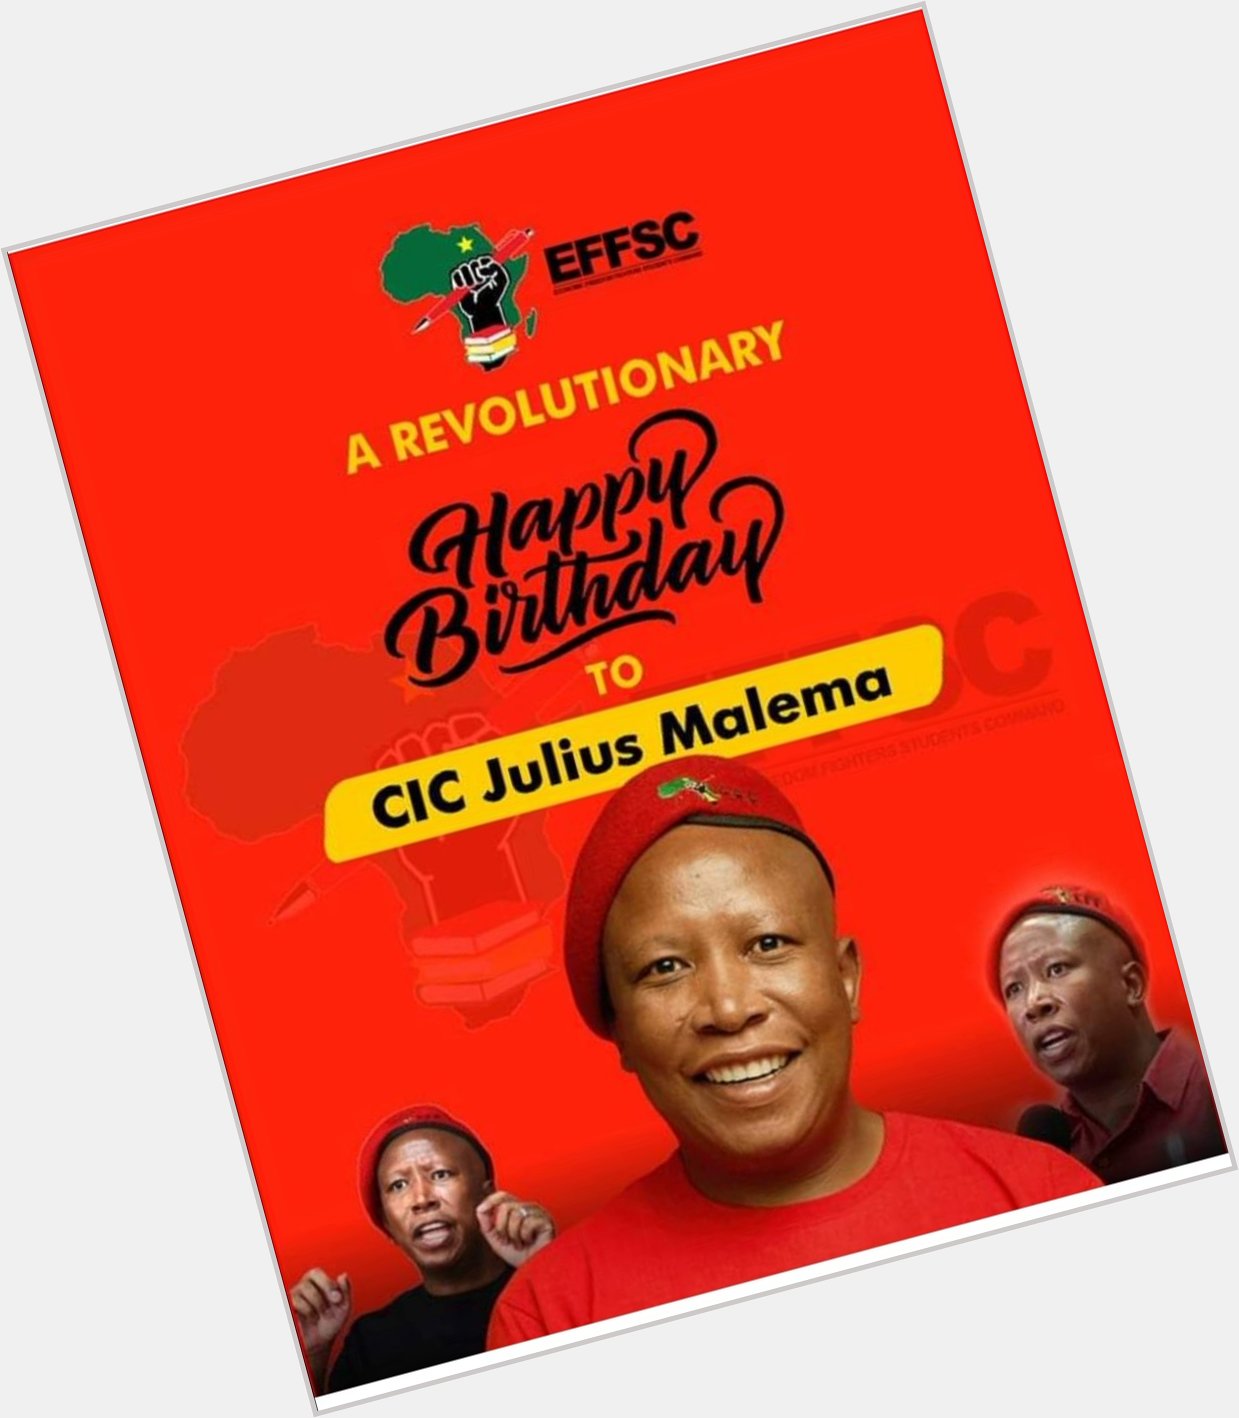 Happy birthday to cic Julius malema 